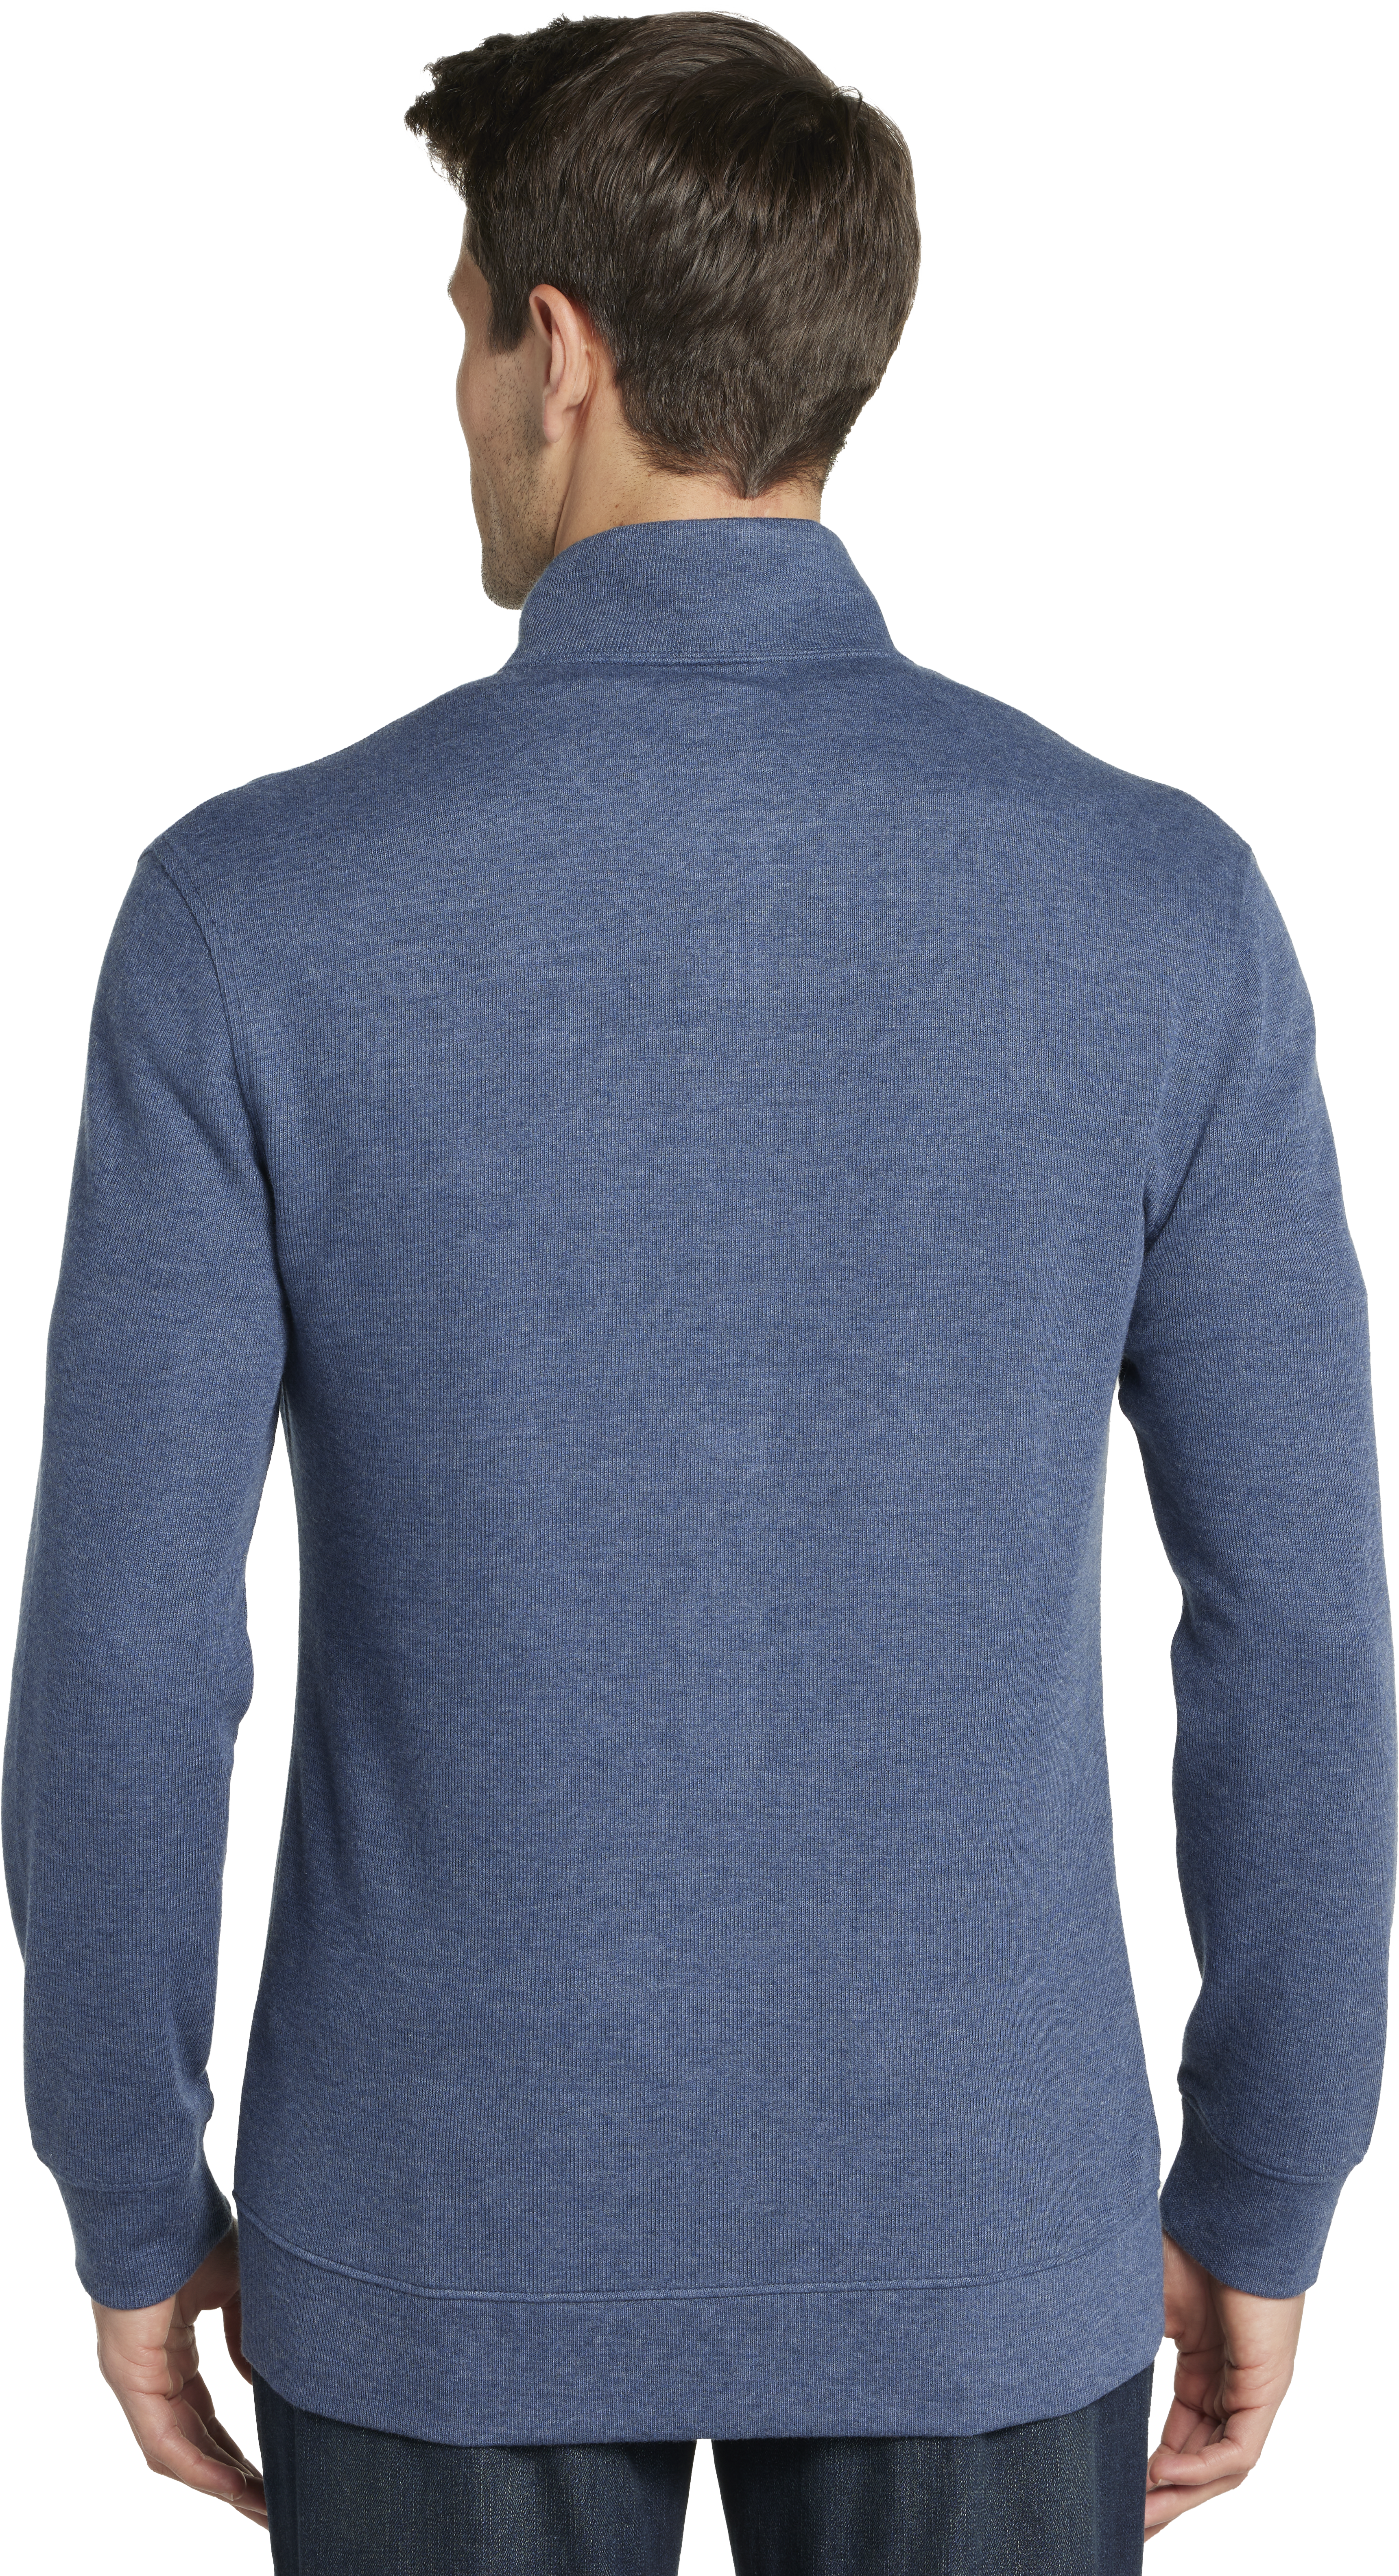 Modern Fit Full Zip Performance Sweater